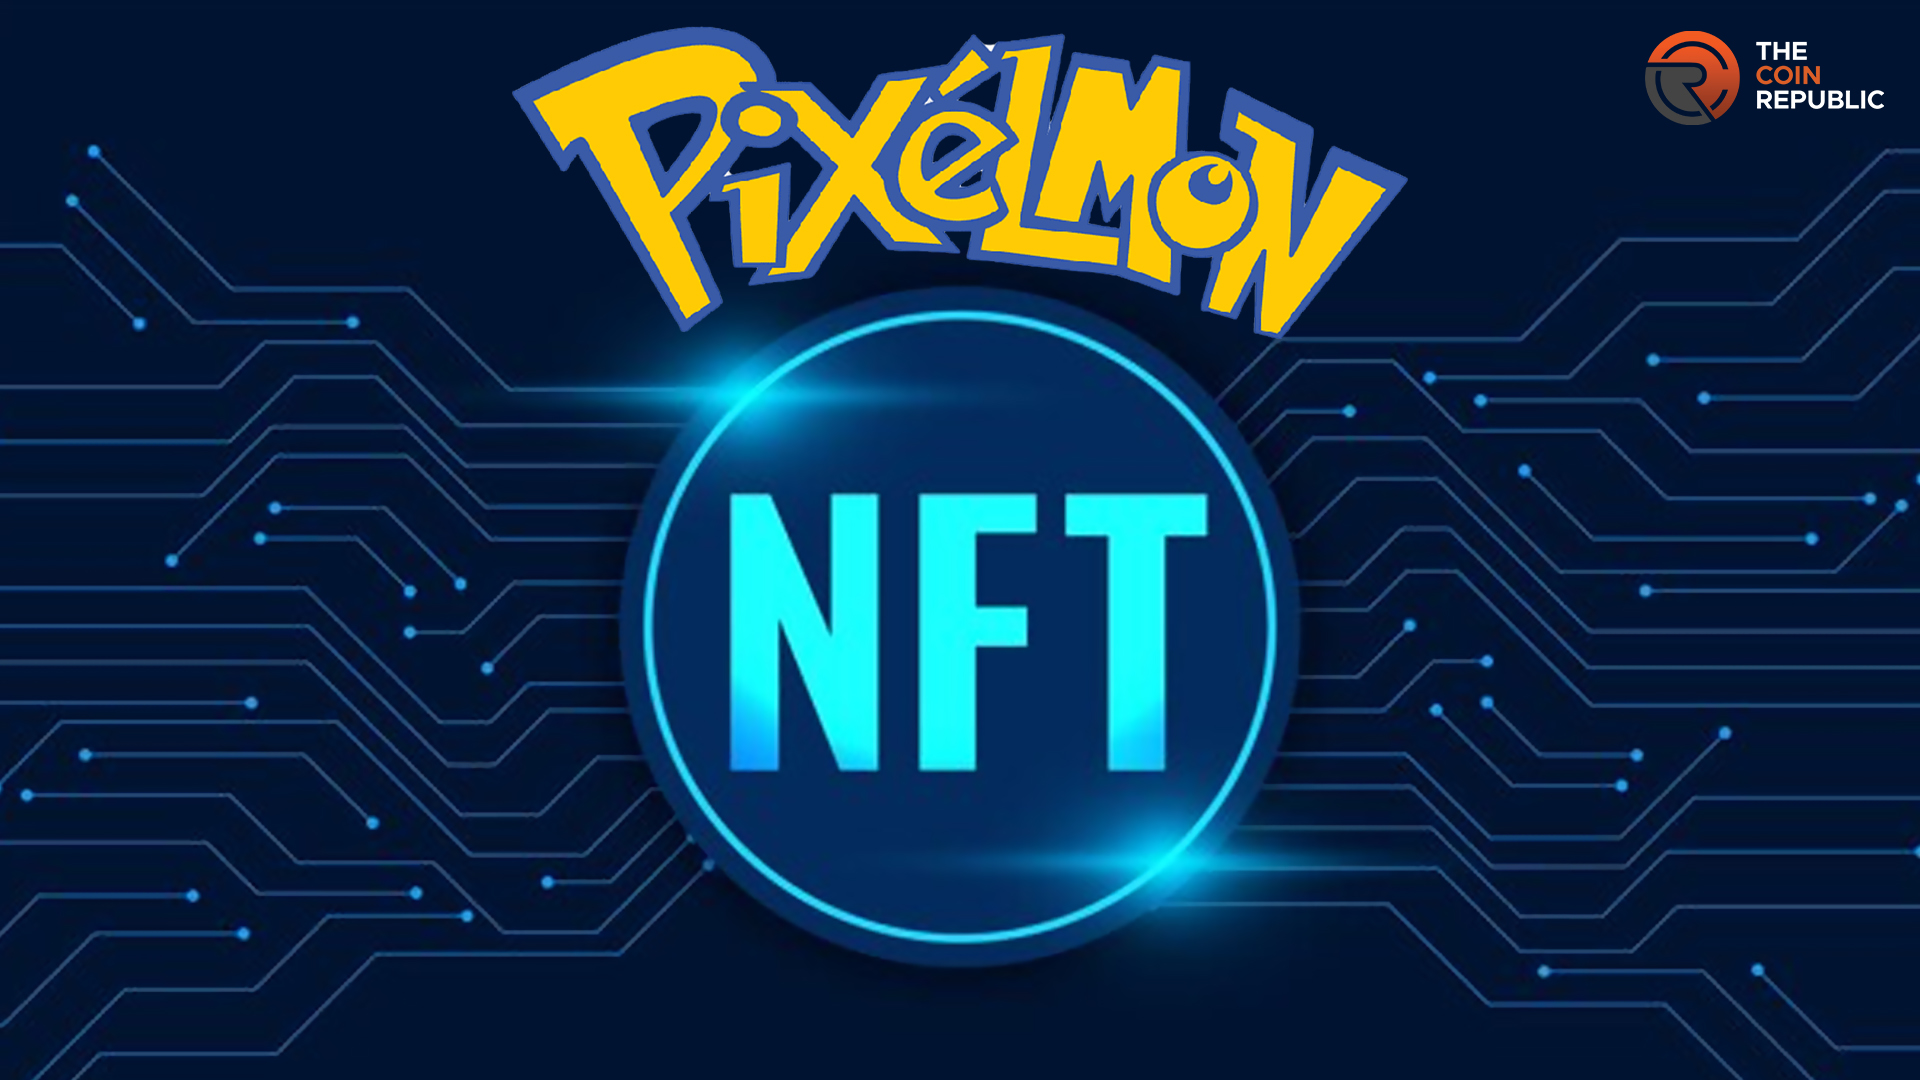 Pixelmon- Generation 1- The NFT Granting Access to Pixelmon Land